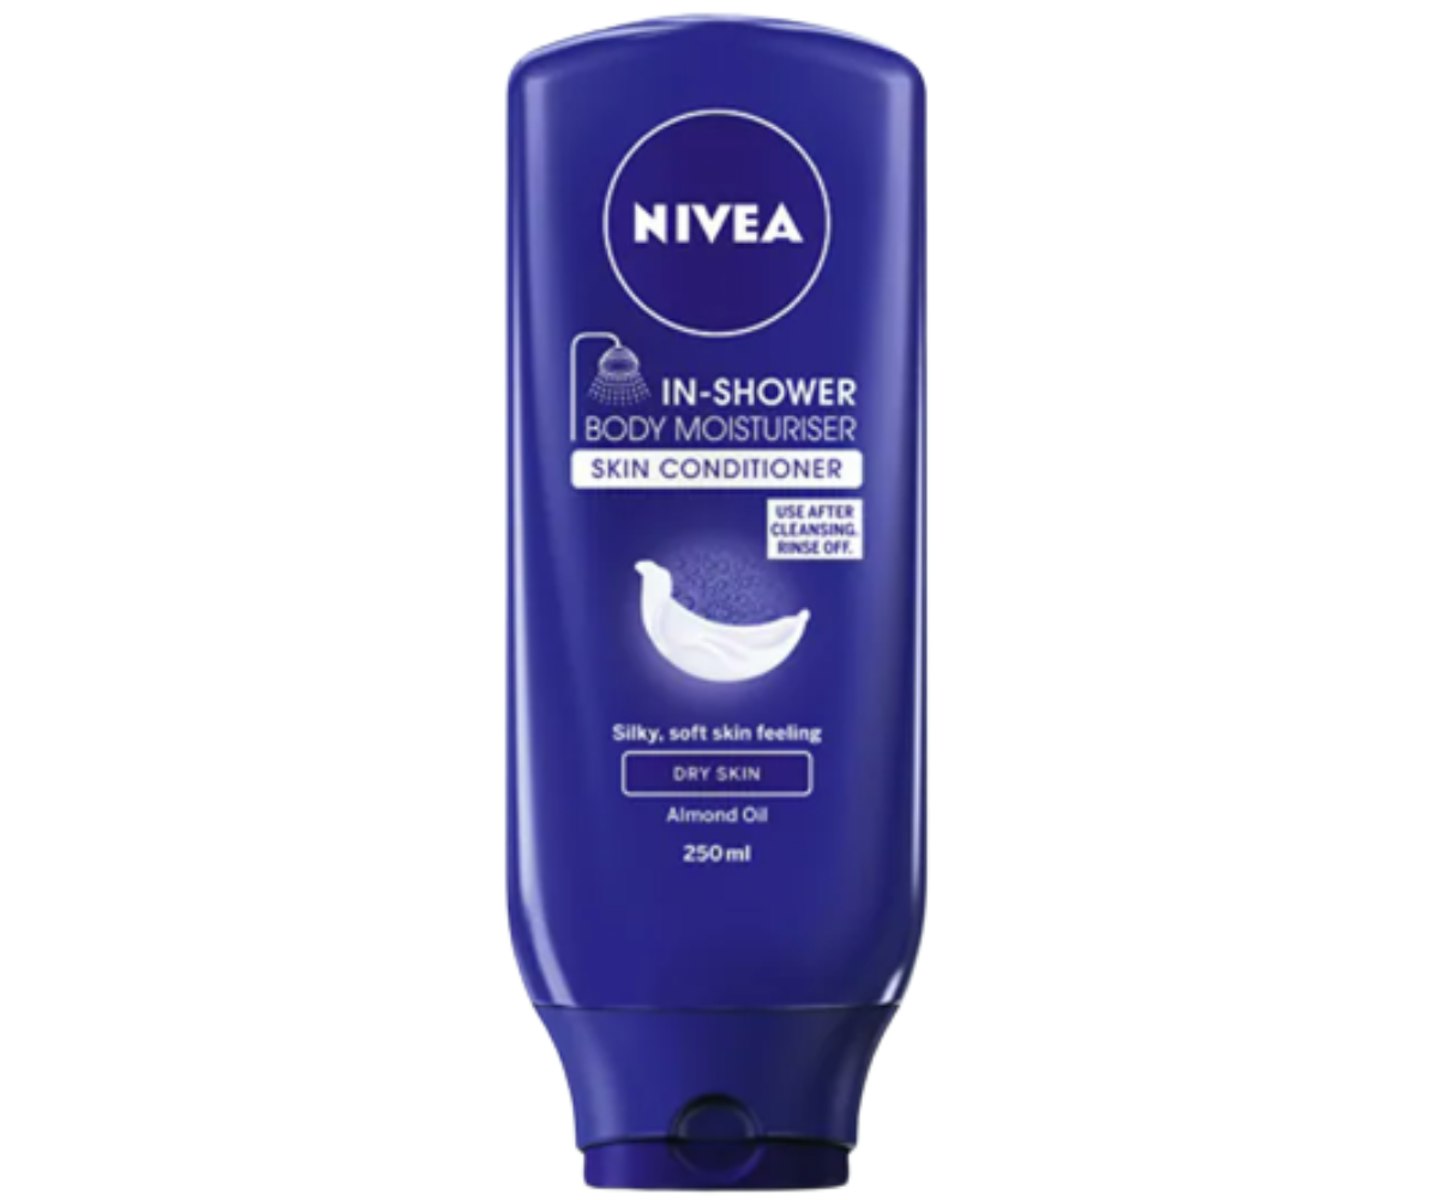 A picture of the Nivea In Shower Body Moisturiser